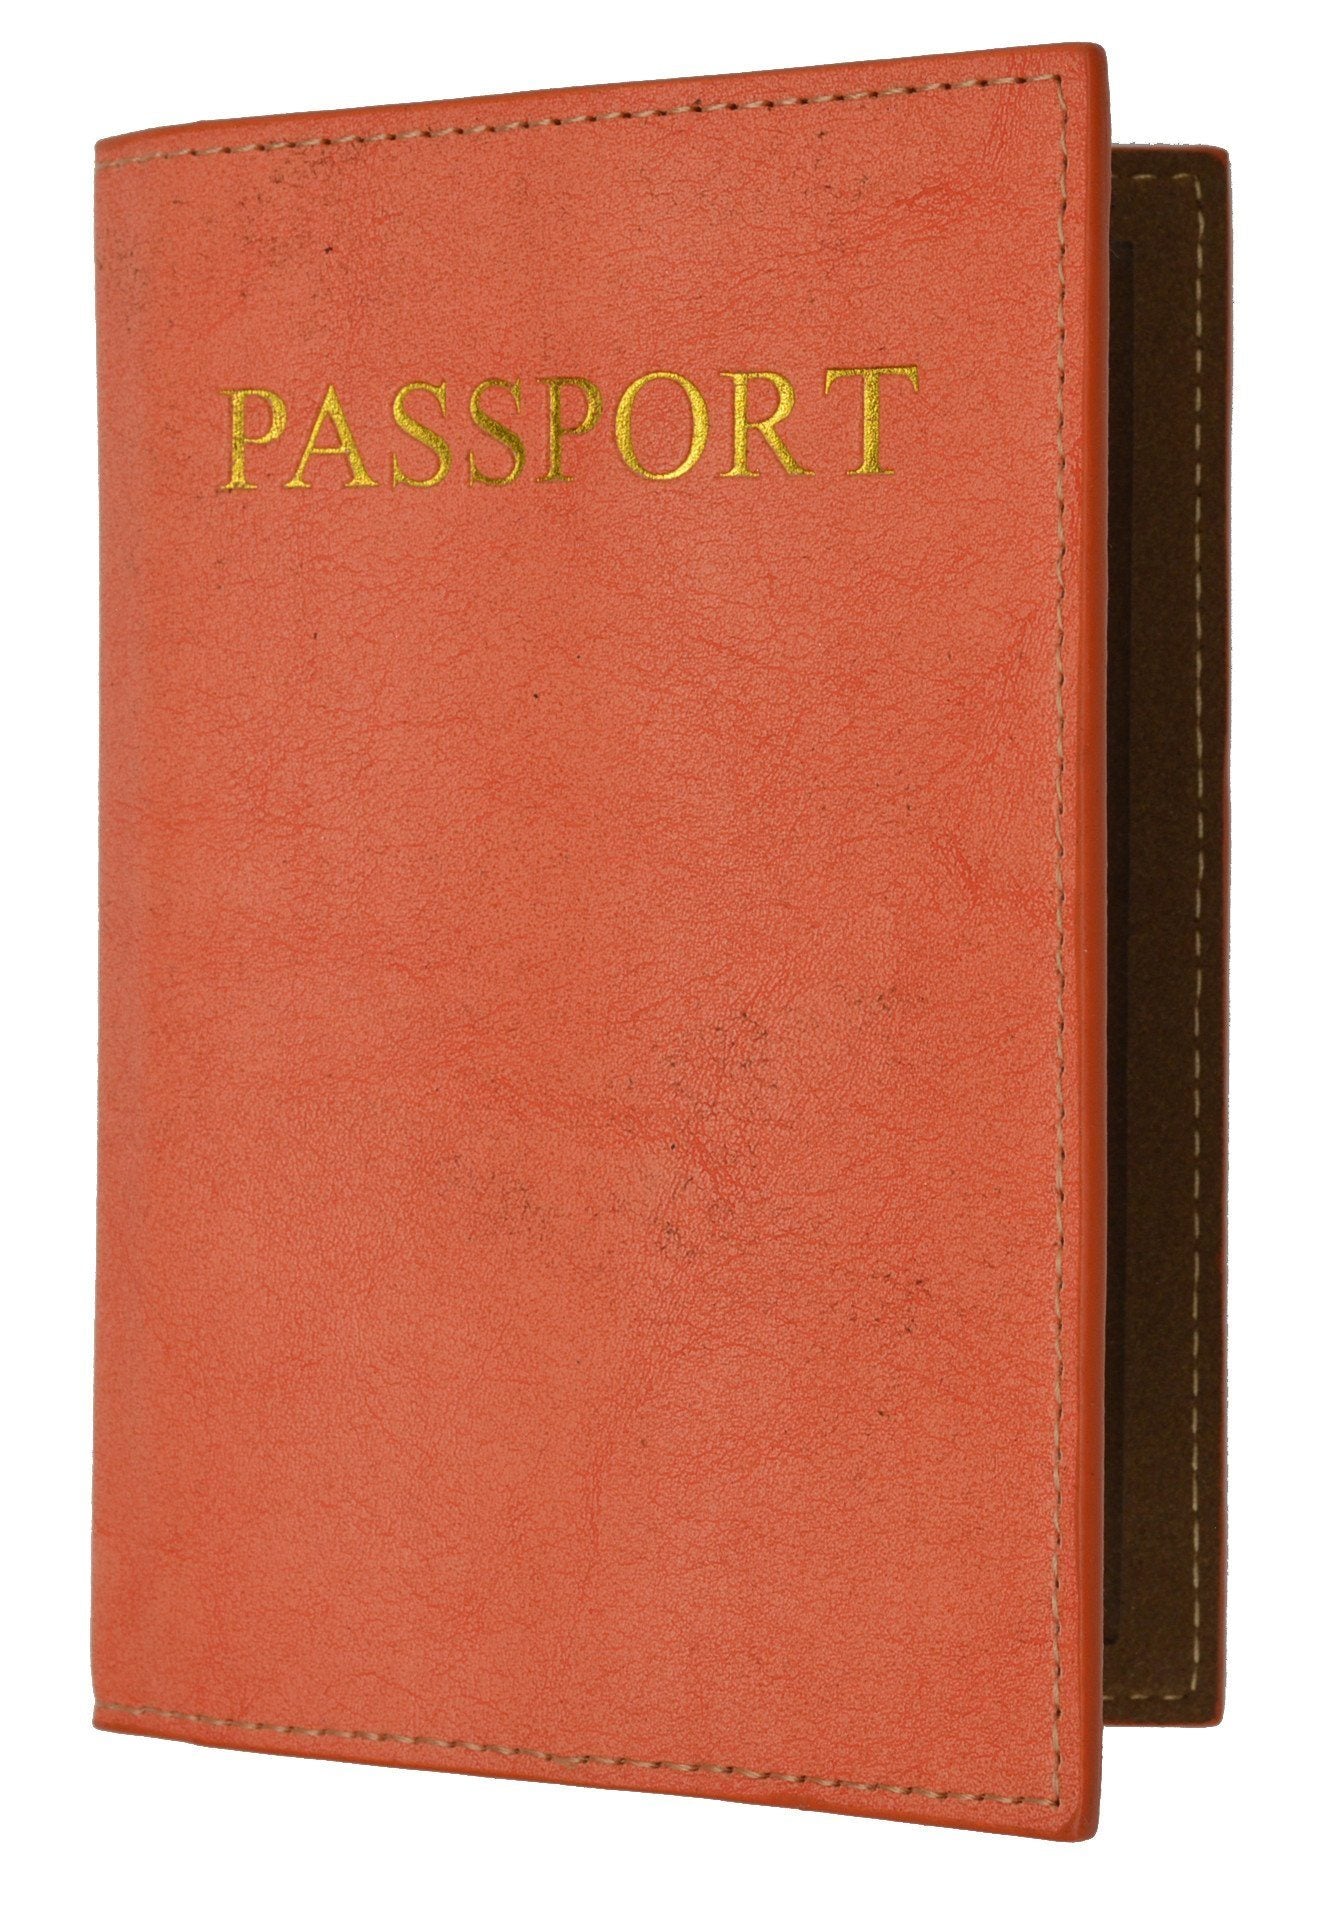 Passport Cover Holder